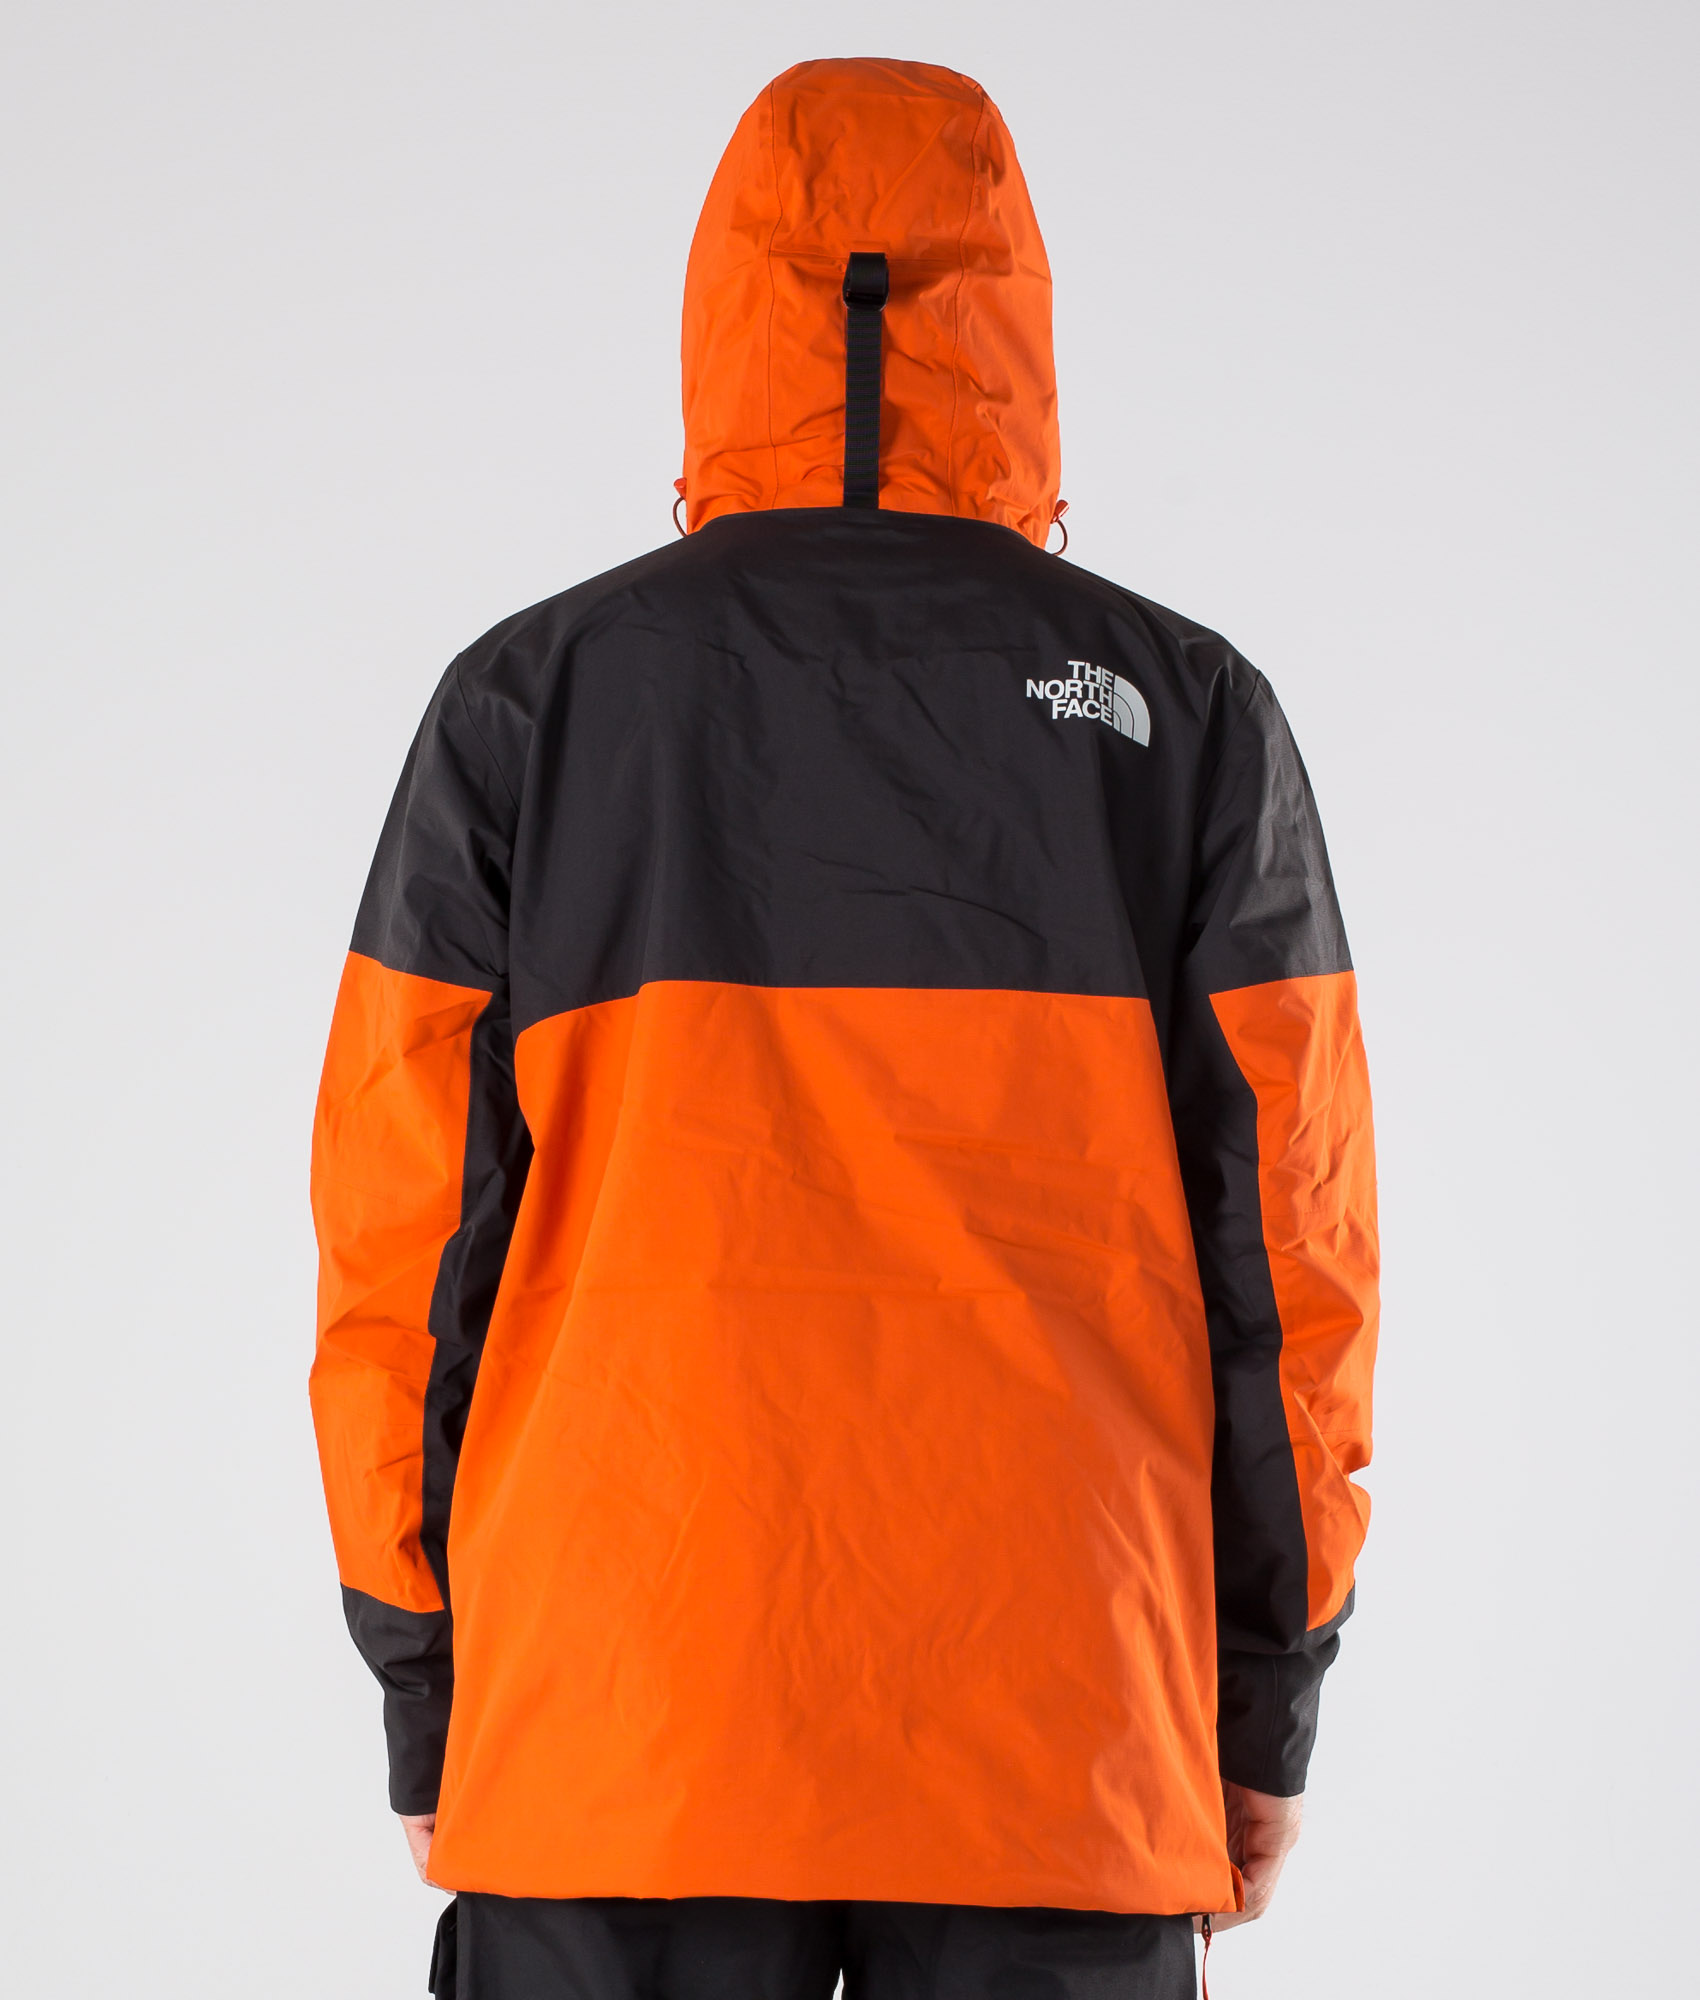 north face jacket orange and black